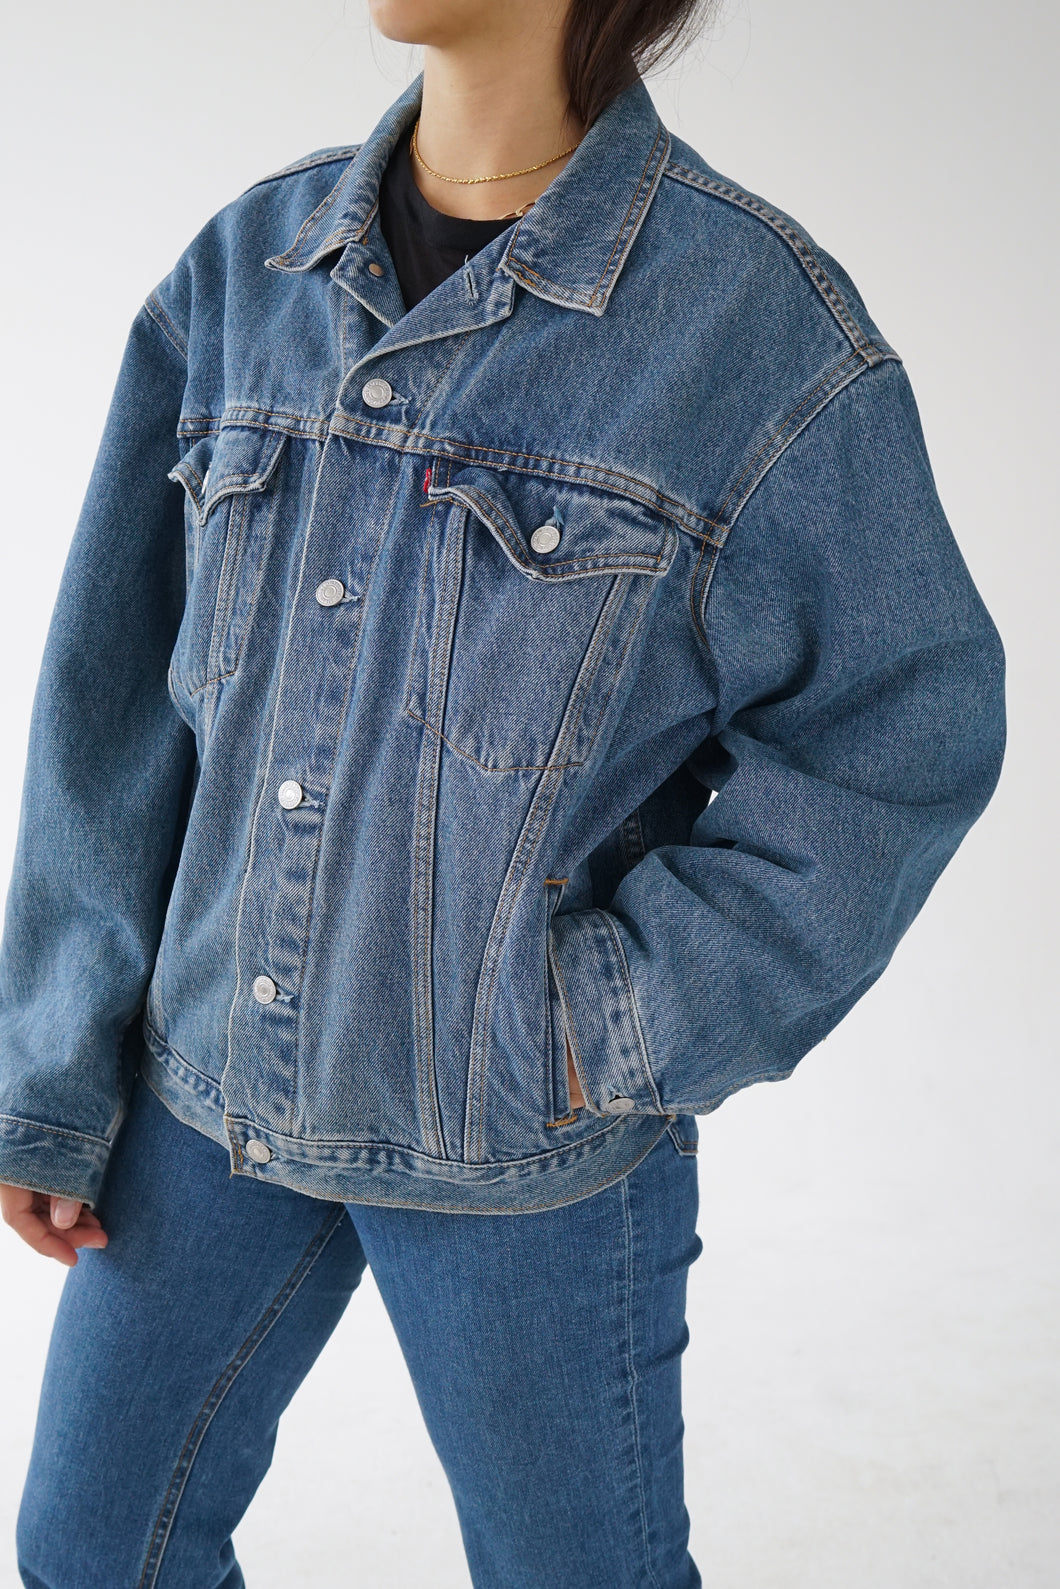 Jean jacket vintage Levis type III 70s-80s avec poches unisex taille M